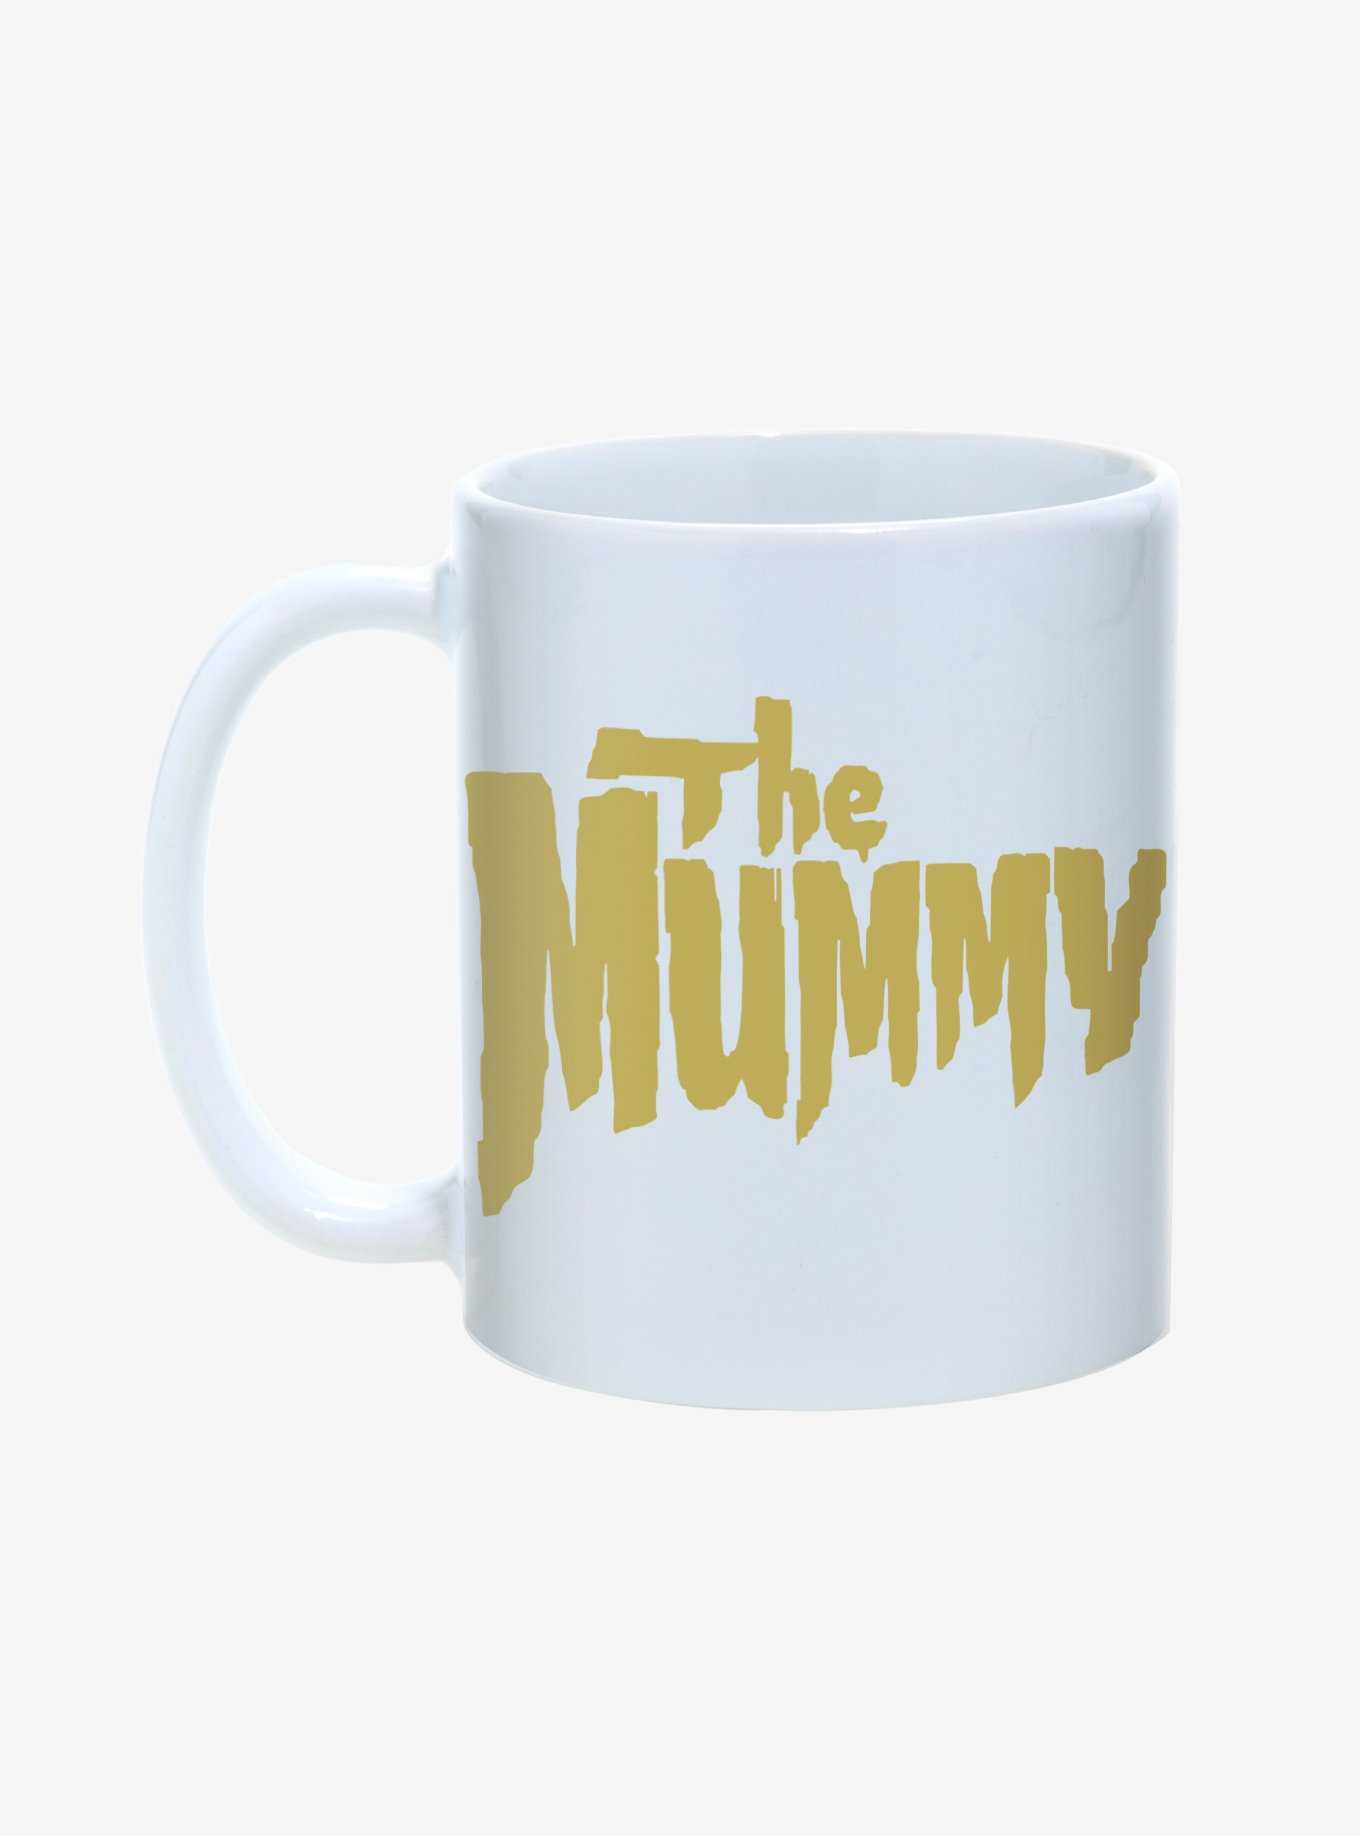 Universal Monsters The Mummy Title Mug 11oz, , hi-res